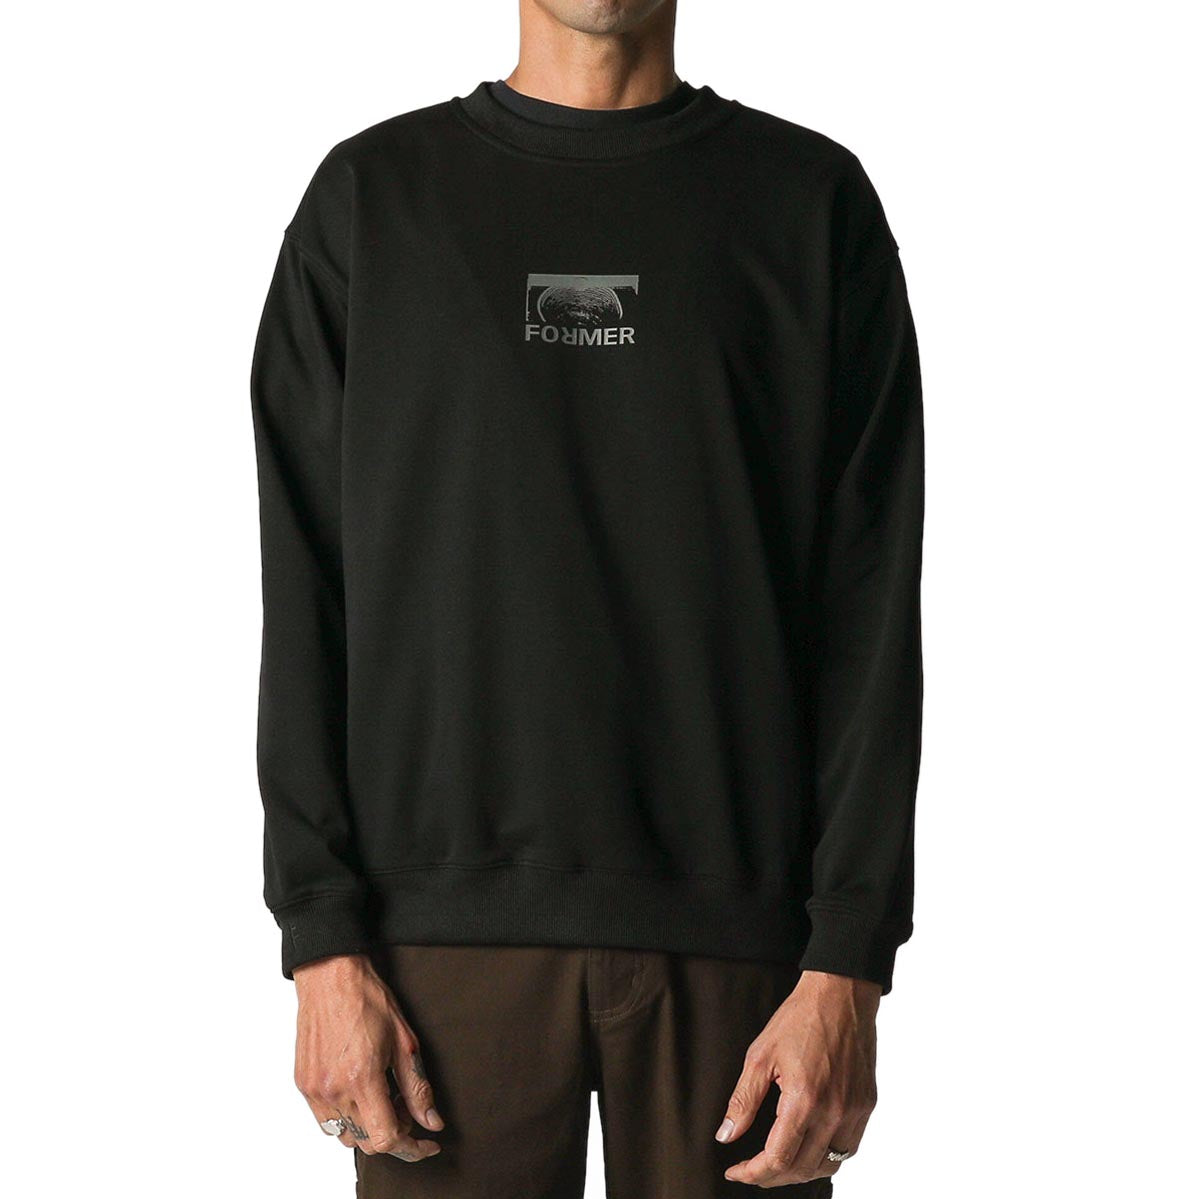 Former Collision Crux Crew Sweatshirt - Black image 1